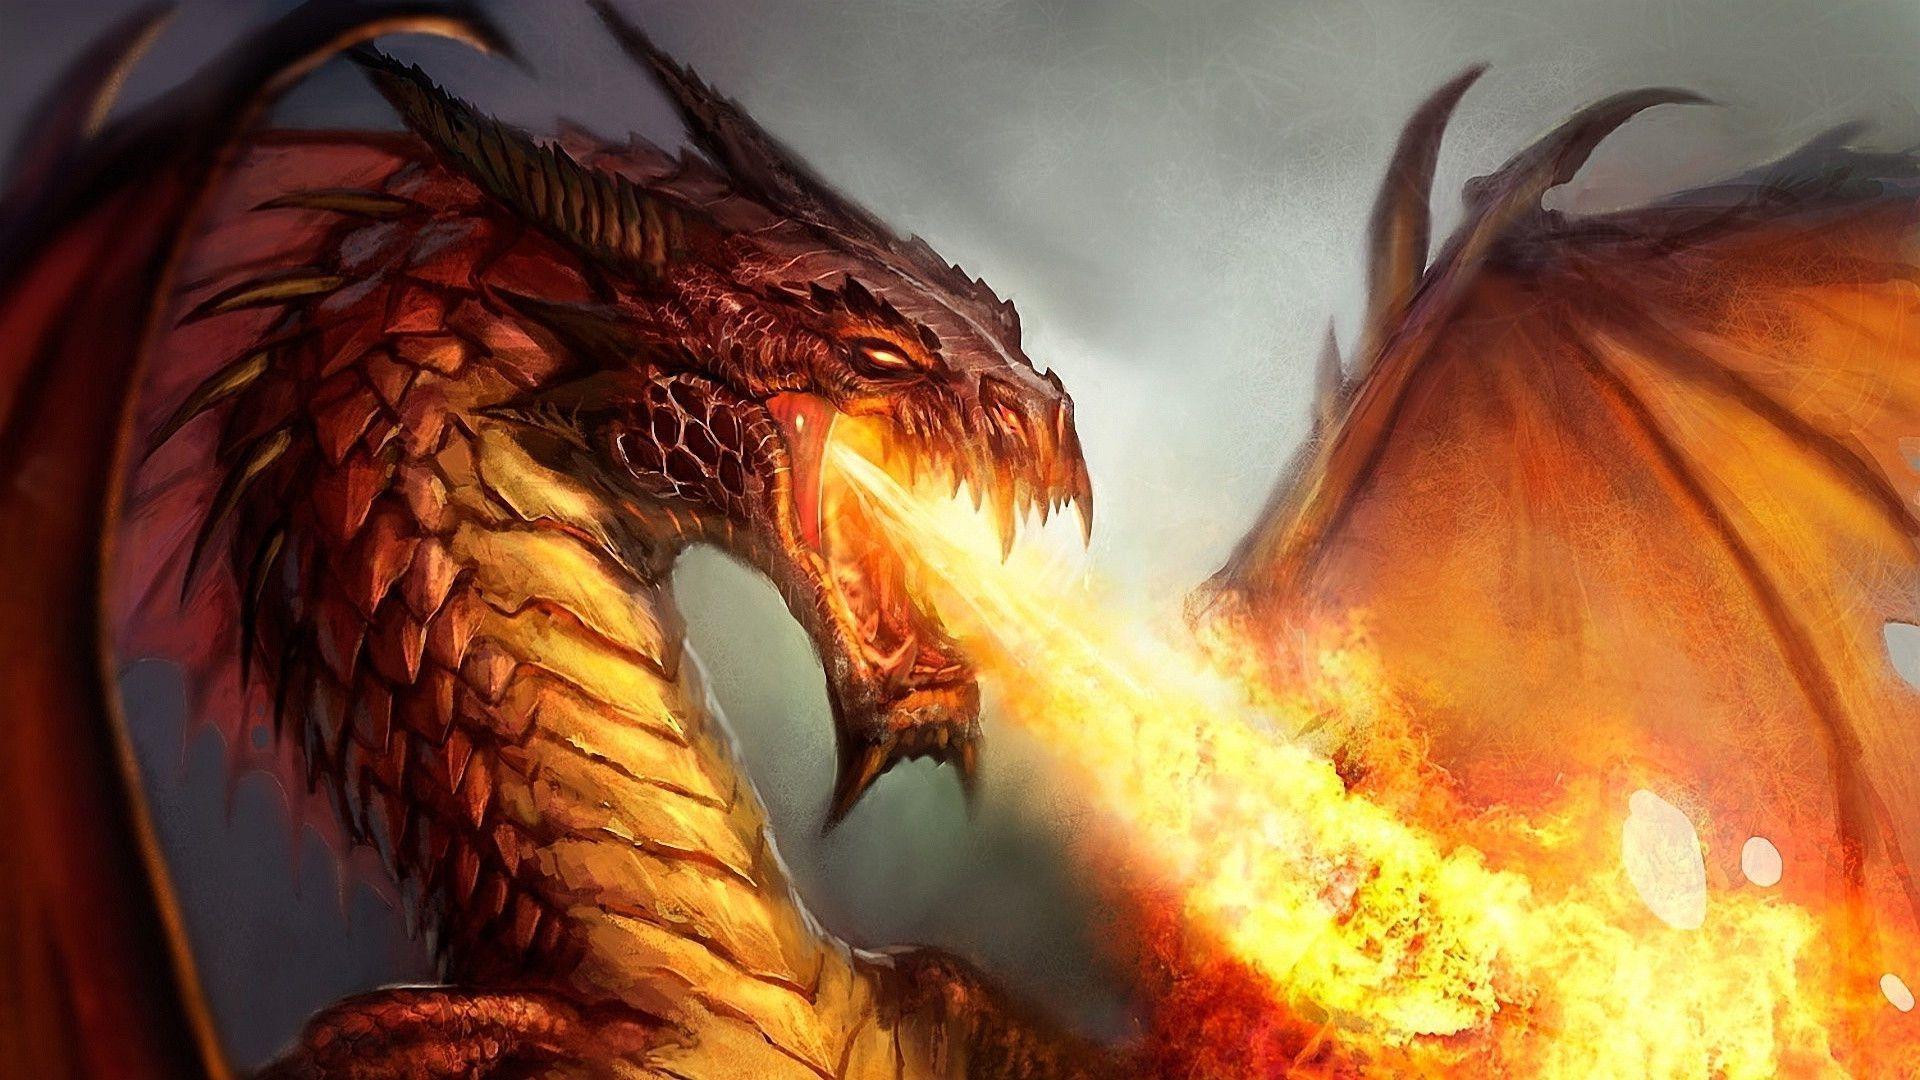 Fire spitting dragon Wallpaper